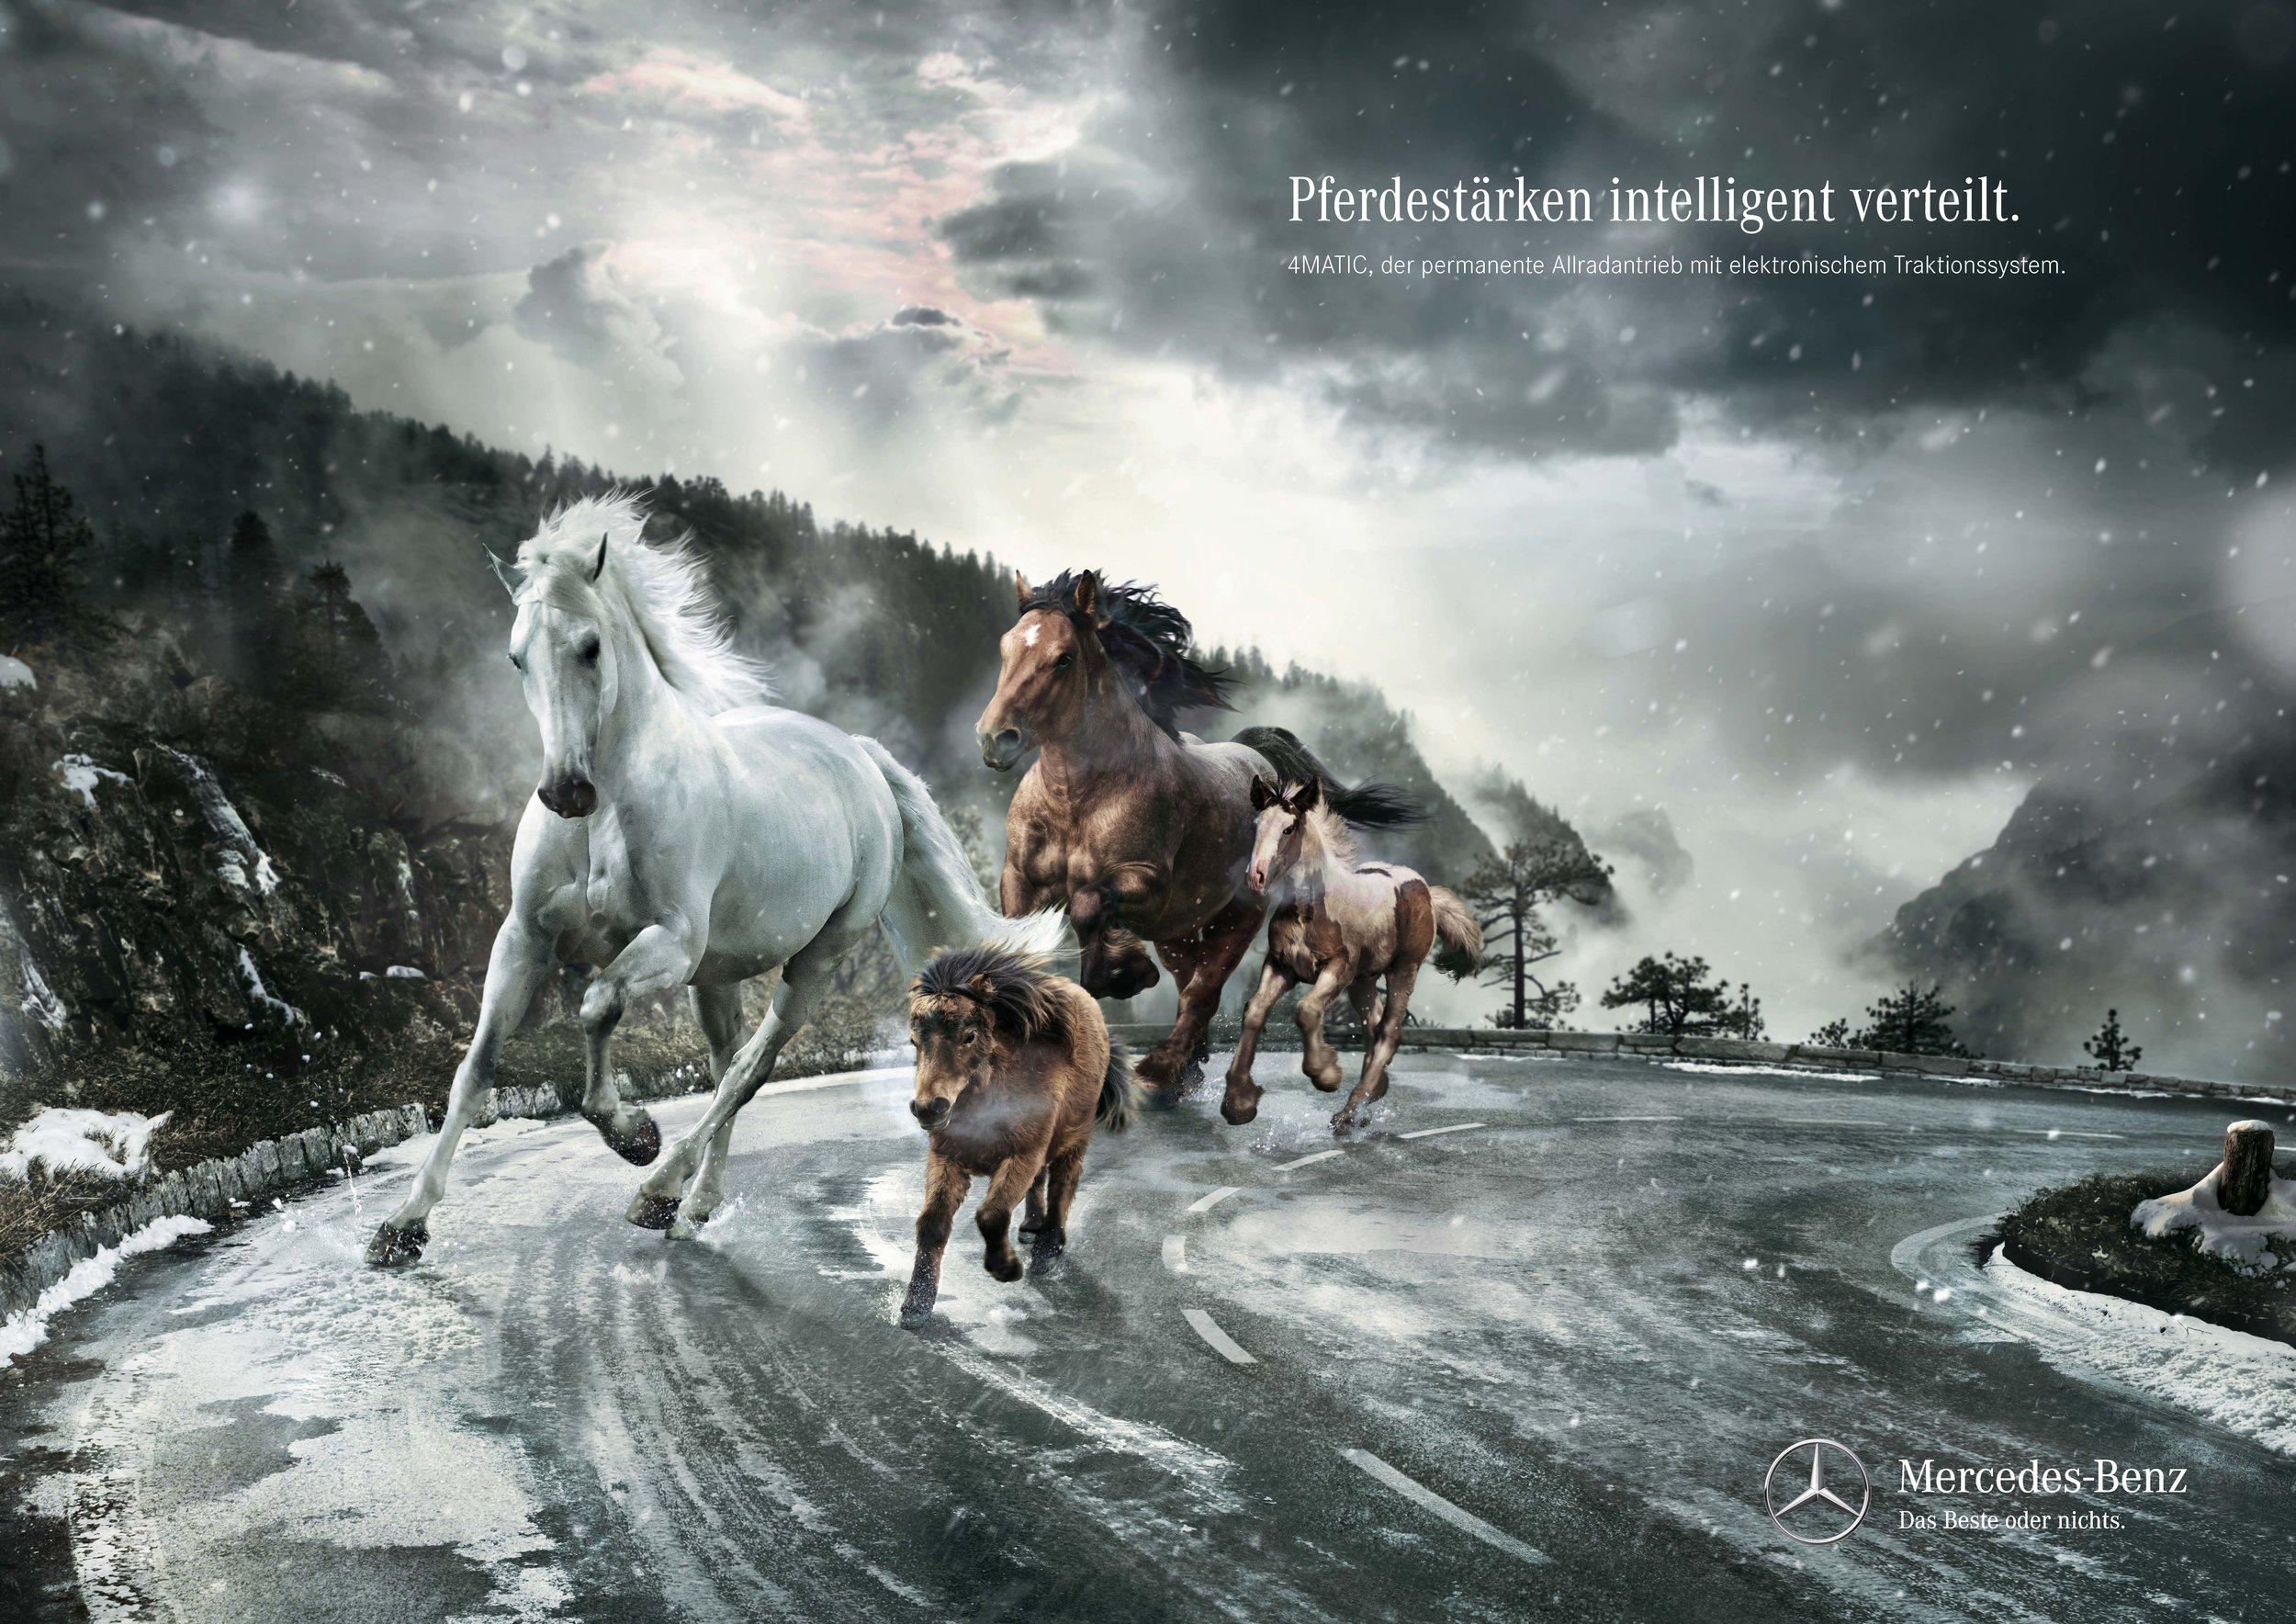 Реклама лошадок. Креативные лошади. О лошадке реклама. Реклама с лошадью. Лошадь машина арт.